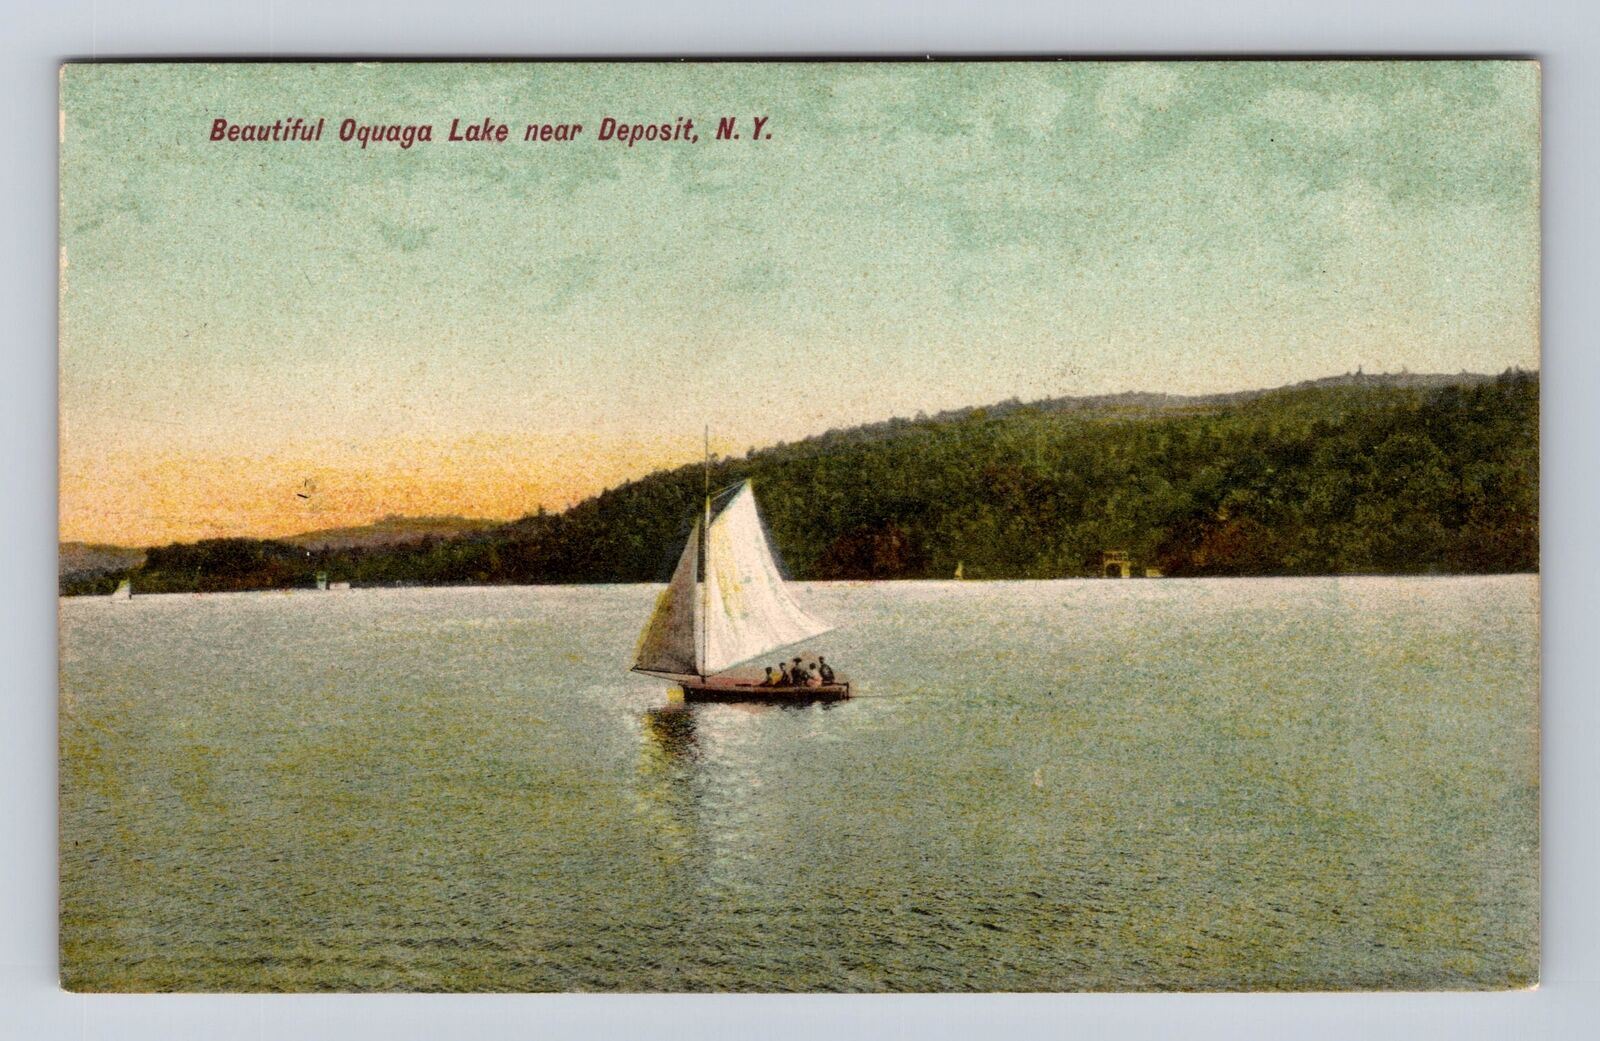 Deposit NY-New York, Oquaga Lake, Antique, Vintage Souvenir Postcard